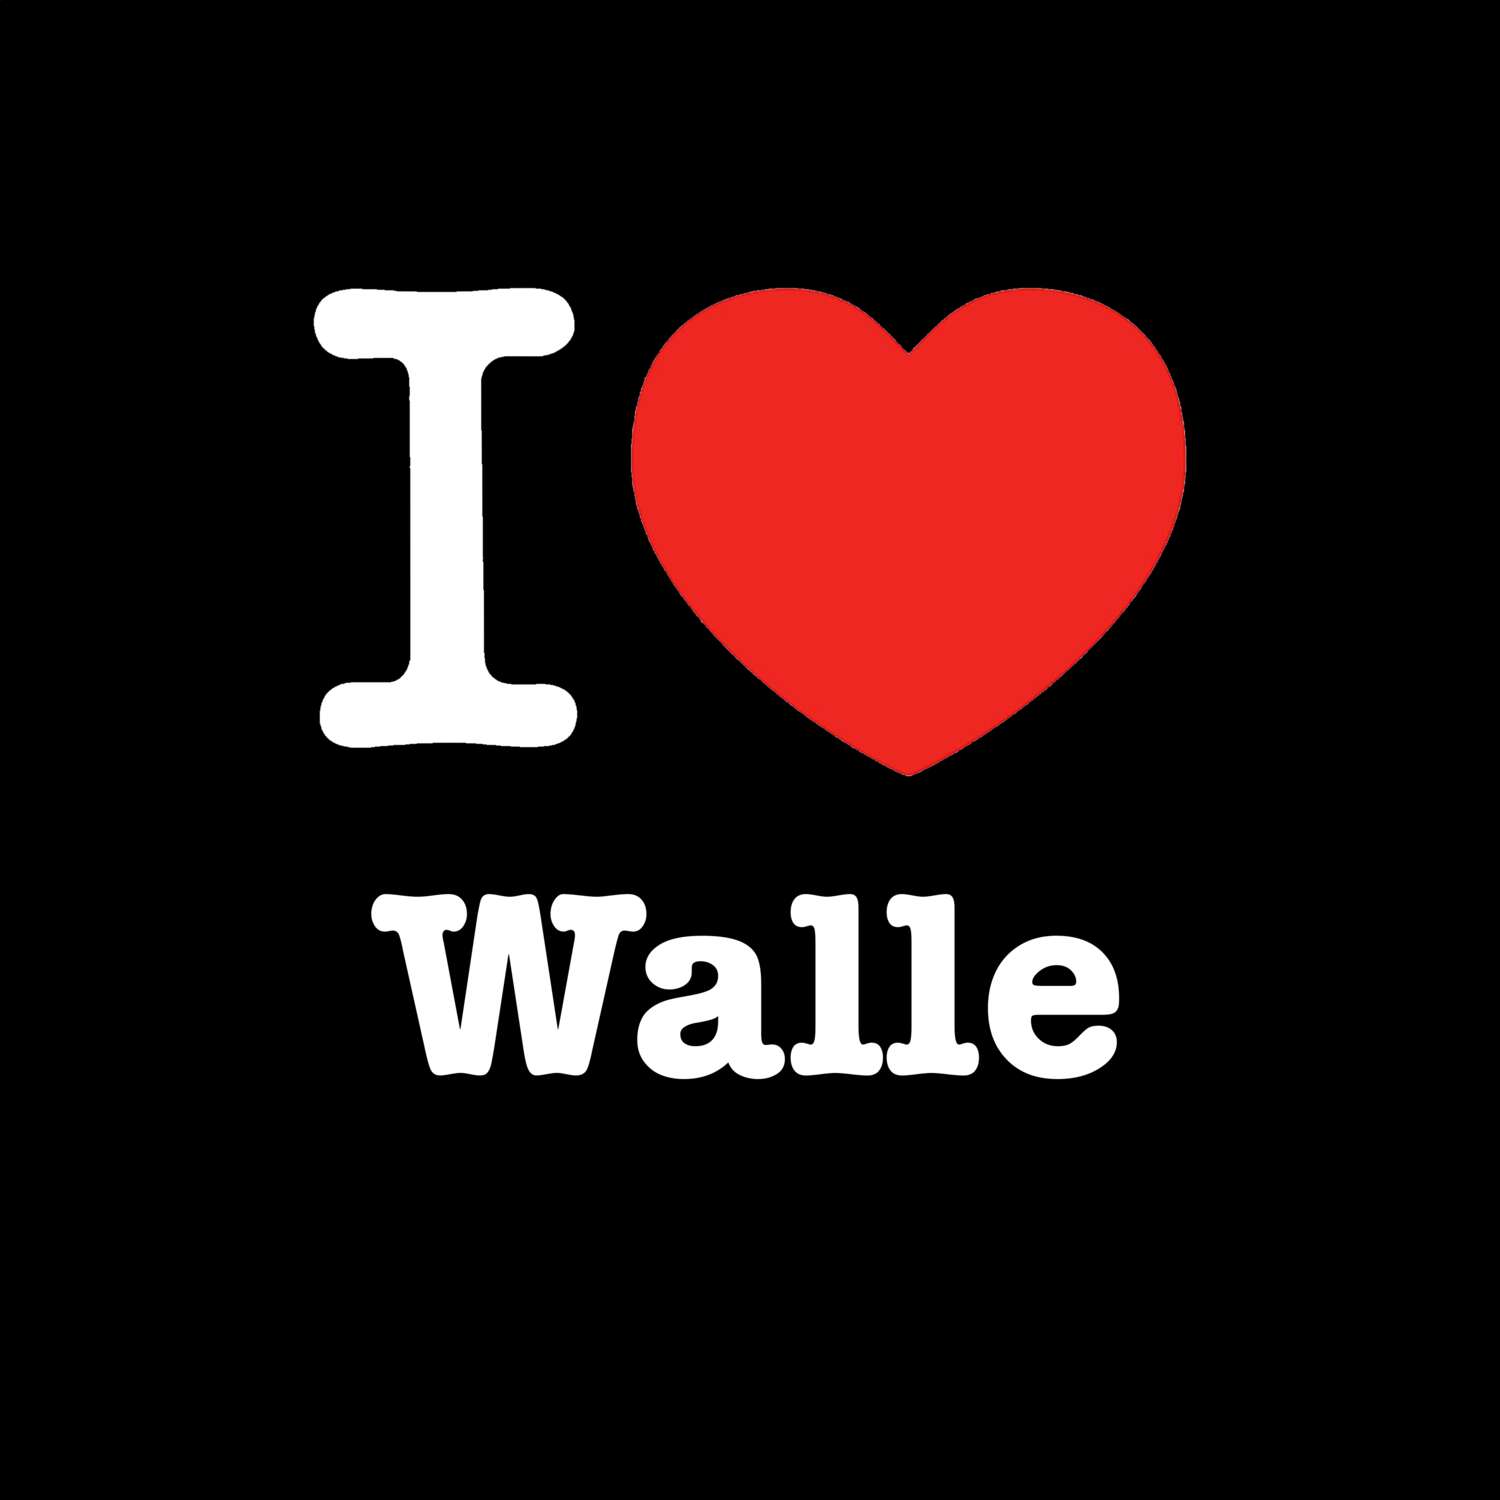 Walle T-Shirt »I love«